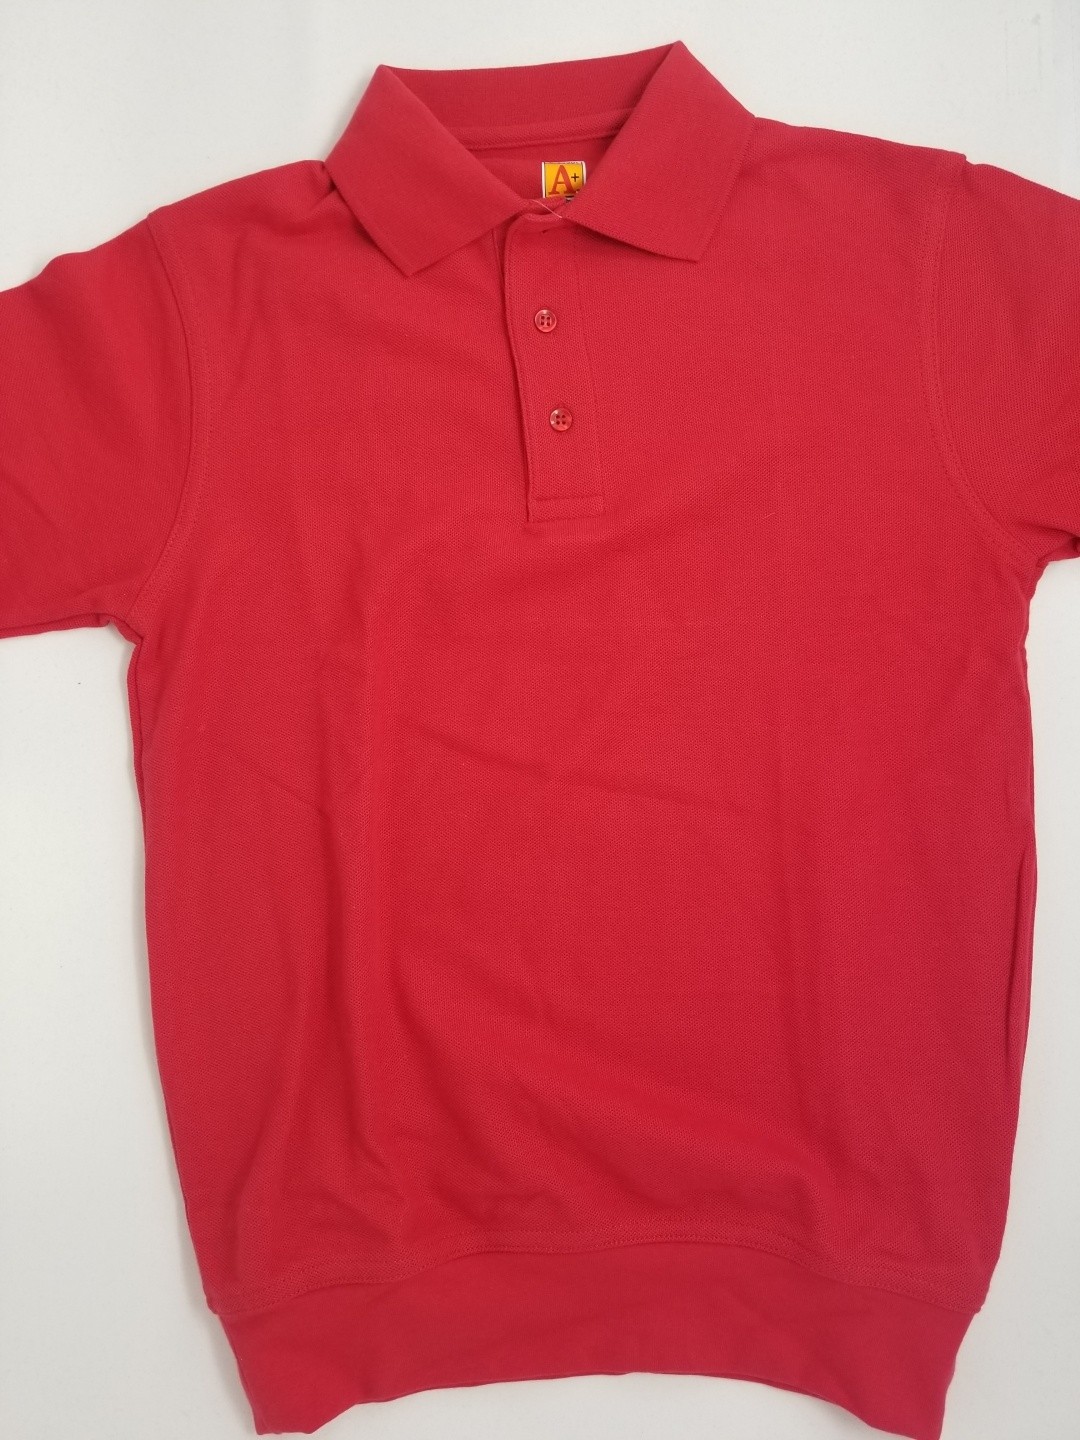 Banded Bottom "No Tuck" Knit Shirt - Pique - Short Sleeve-Red